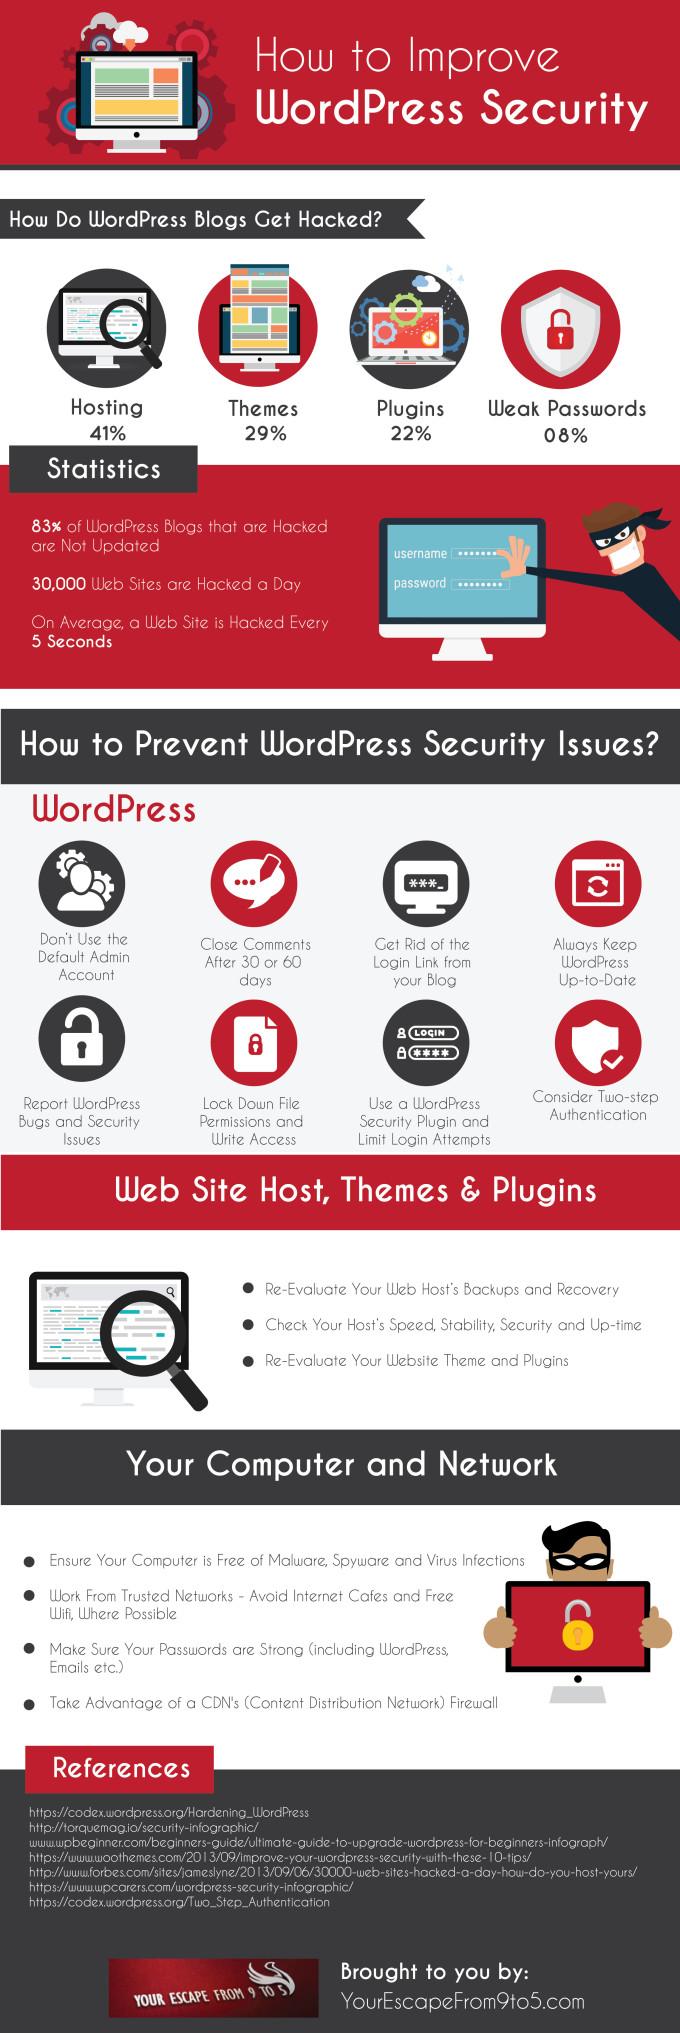 How To Improve WordPress Security